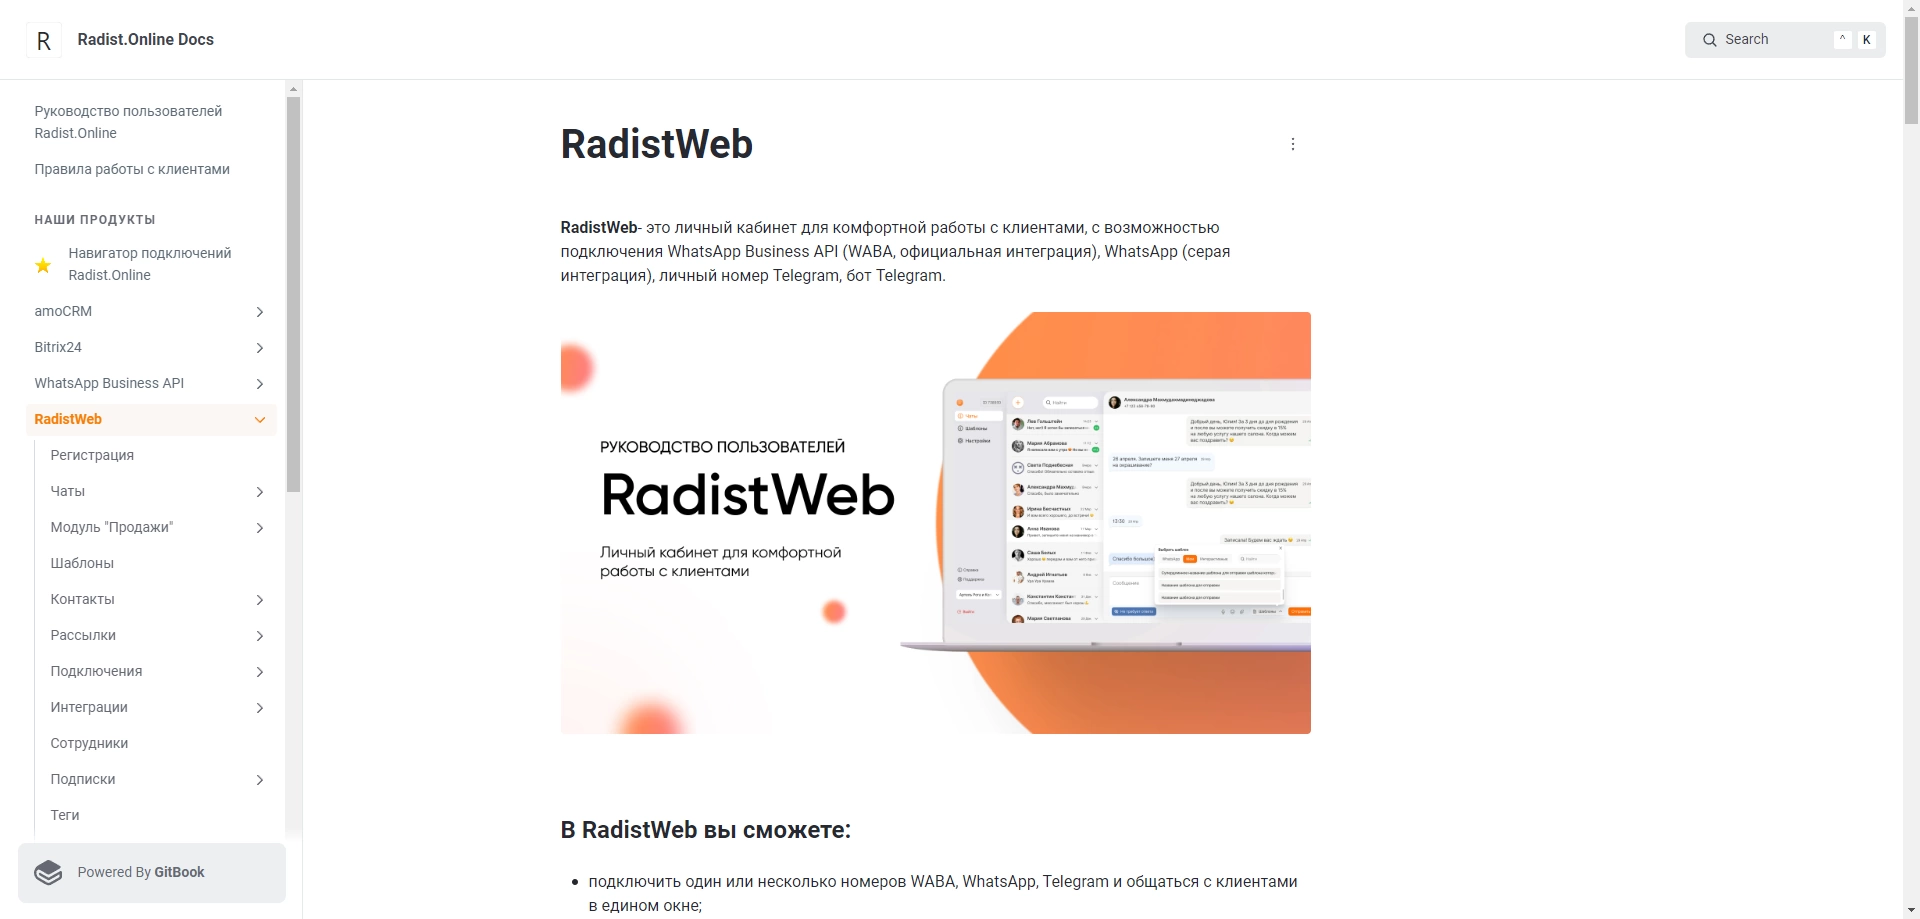 CRM-система RadistWeb - руководство пользователей